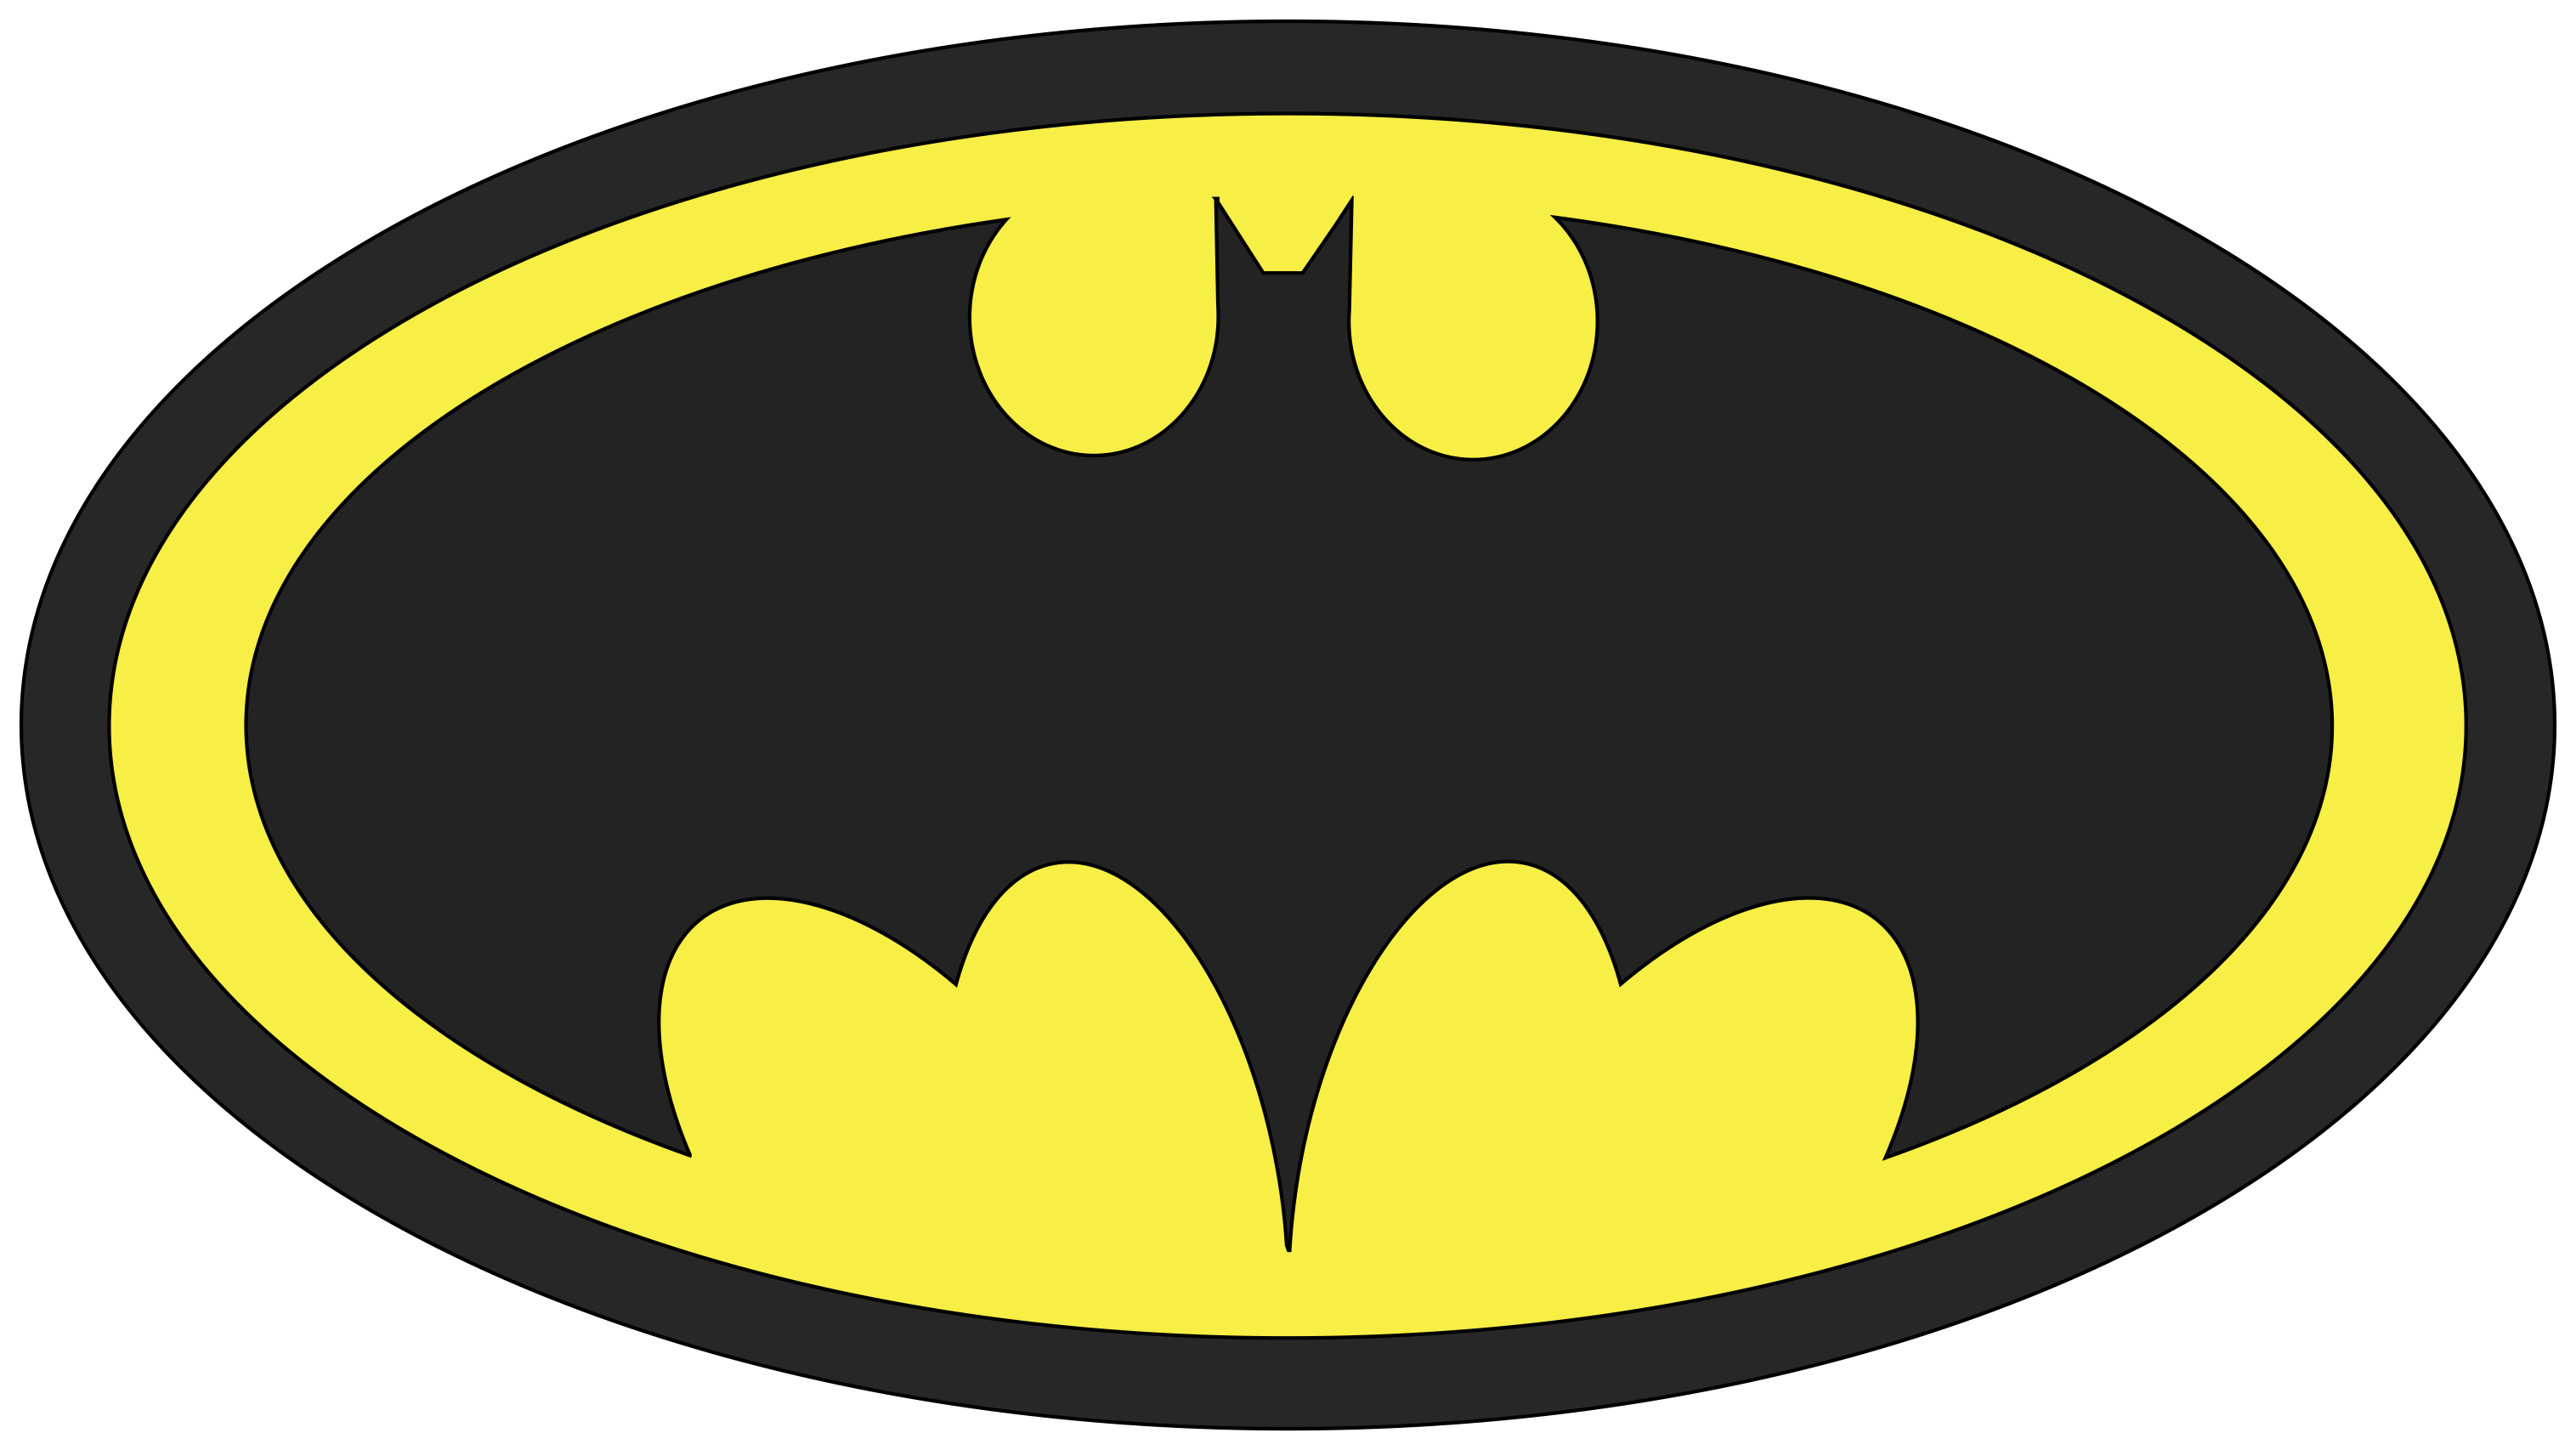 Batman Insignia Template - Cliparts.co